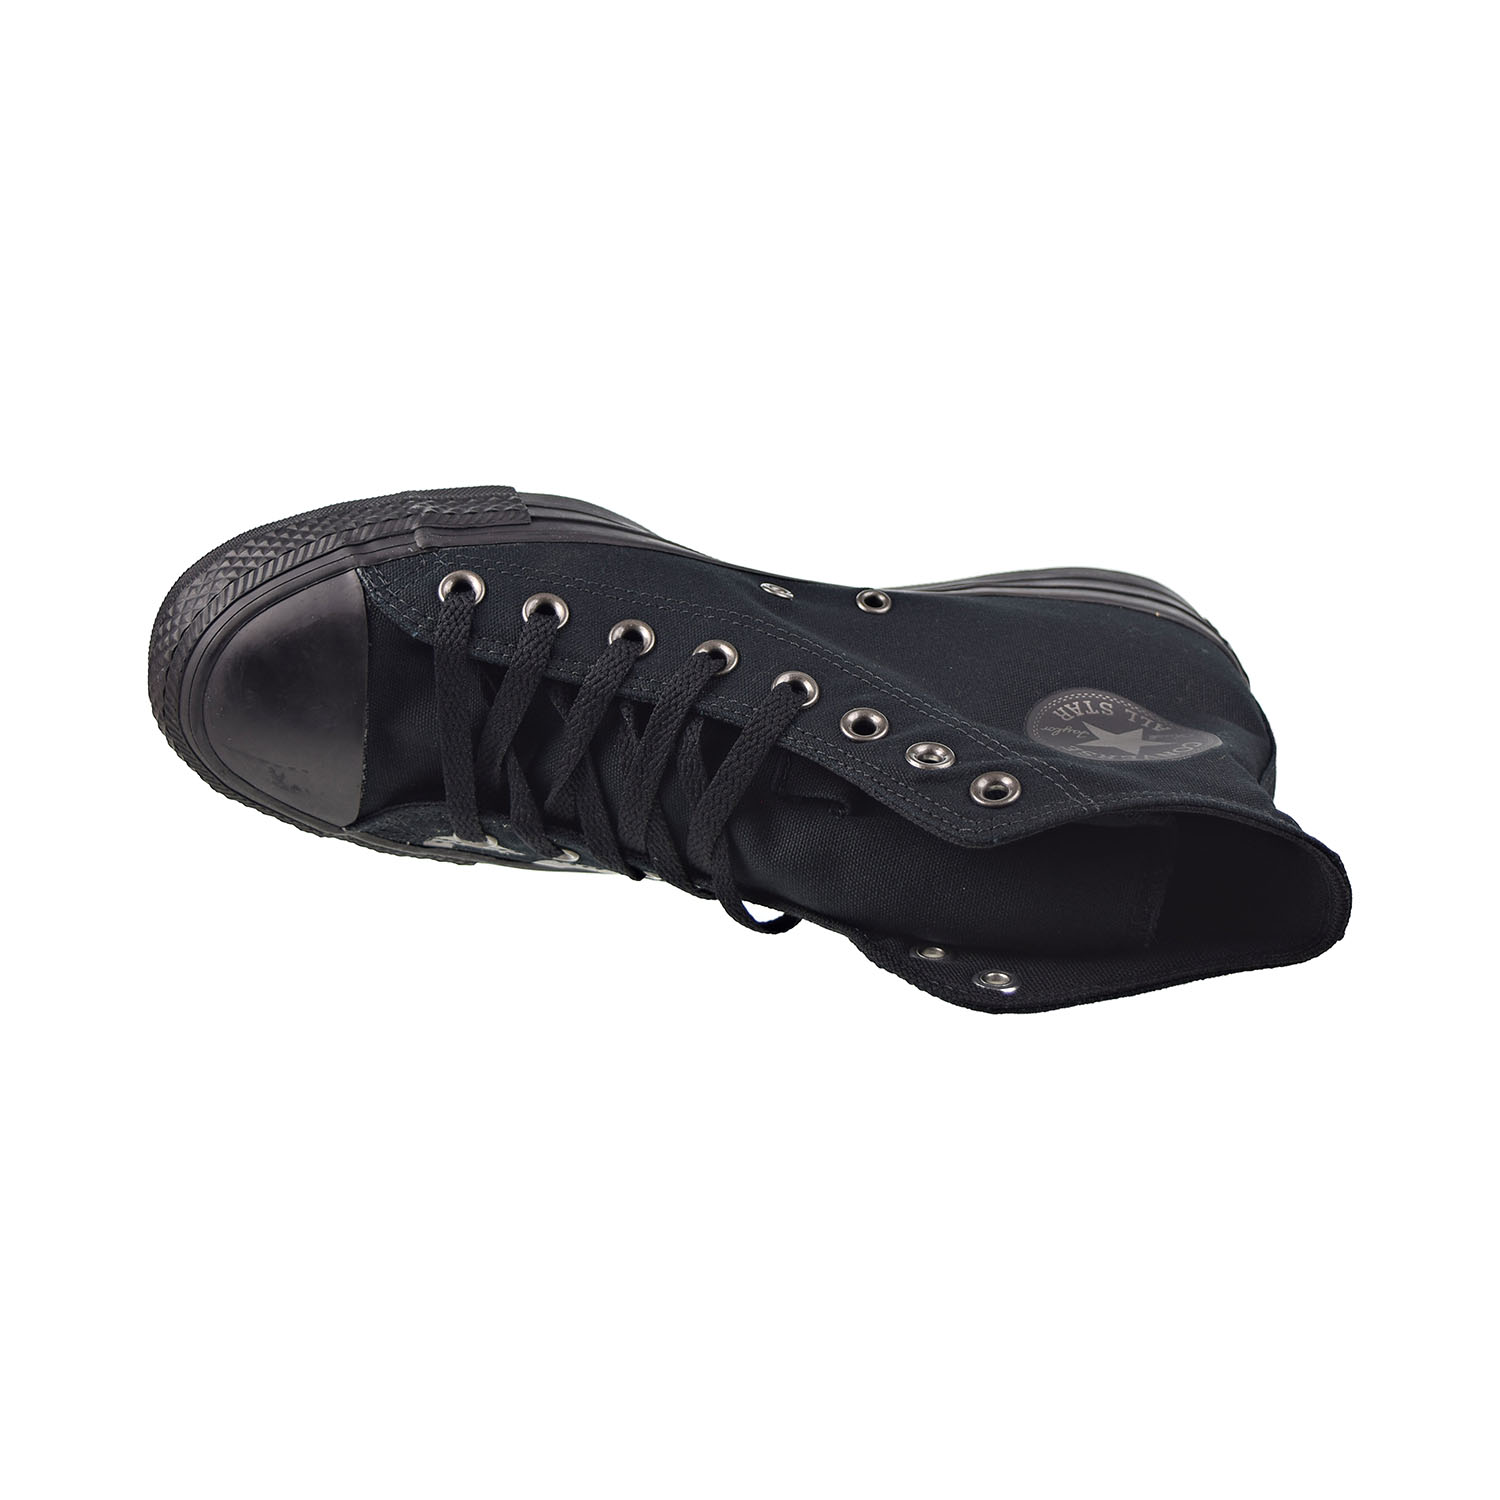 Converse Chuck Taylor All Star Hi Wordmark 2.0 Men's Shoes Black-Gunmetal-Black 165429f - image 5 of 6